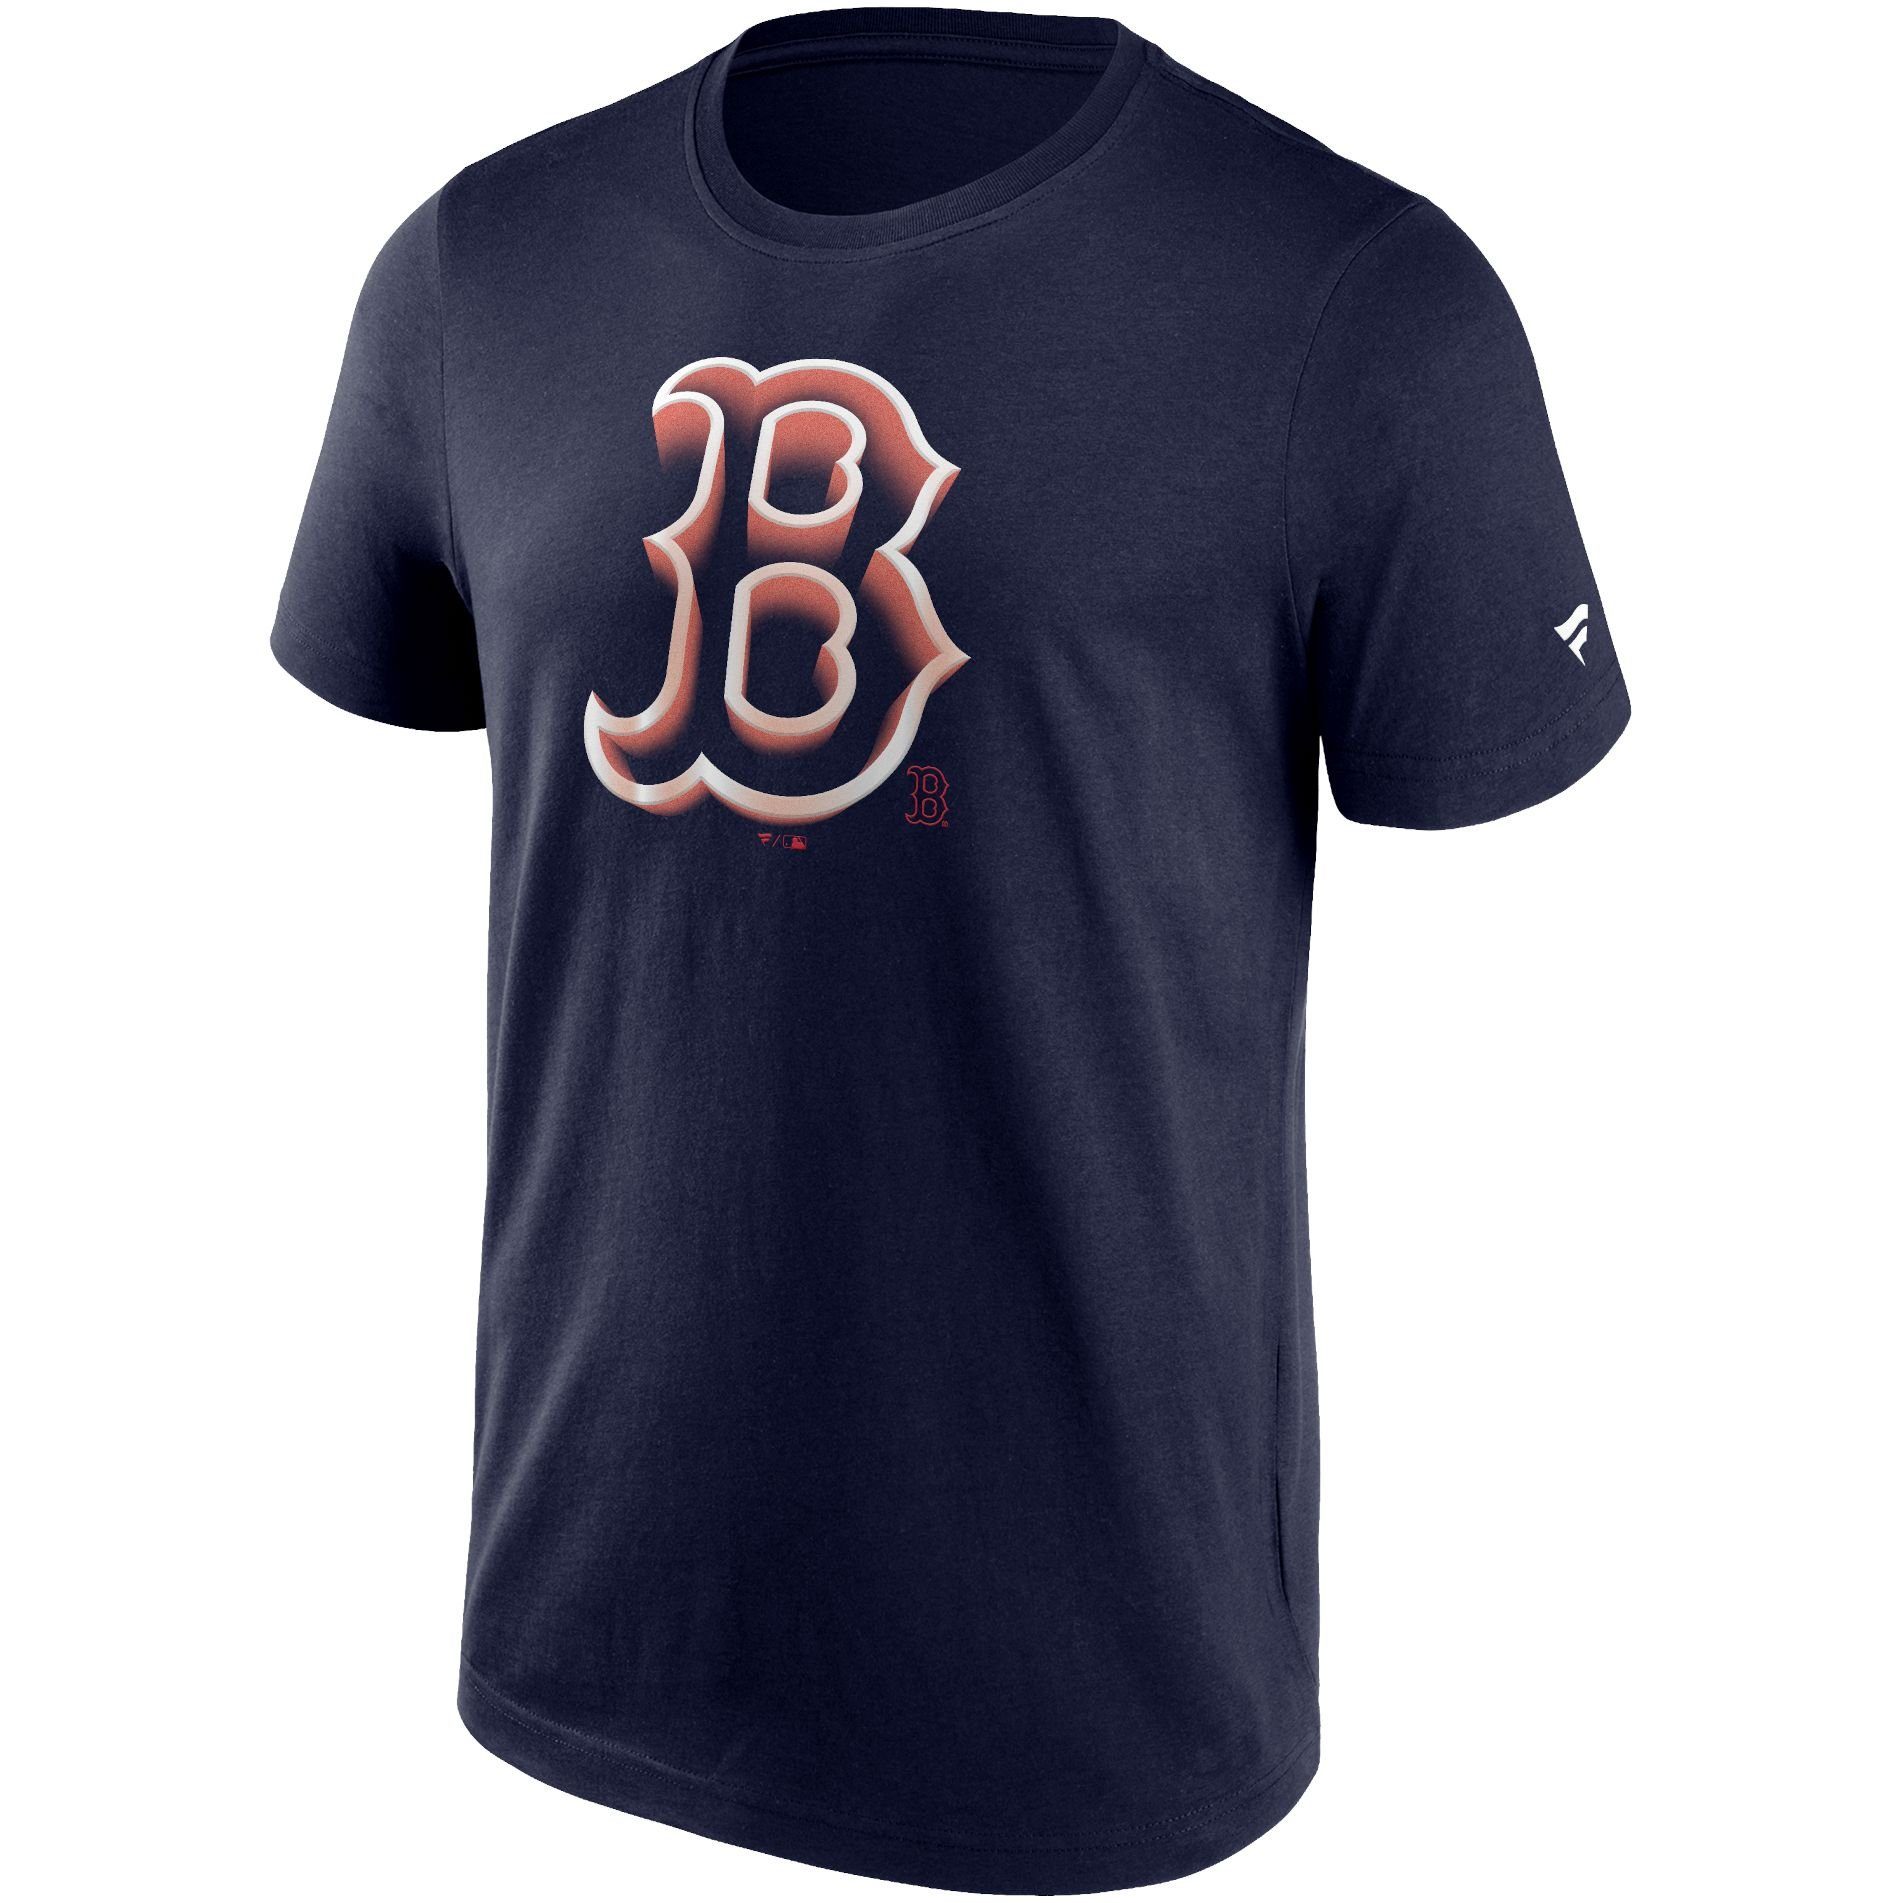 Fanatics Print-Shirt CHROME LOGO MLB NHL NFL Teams Boston Red Sox